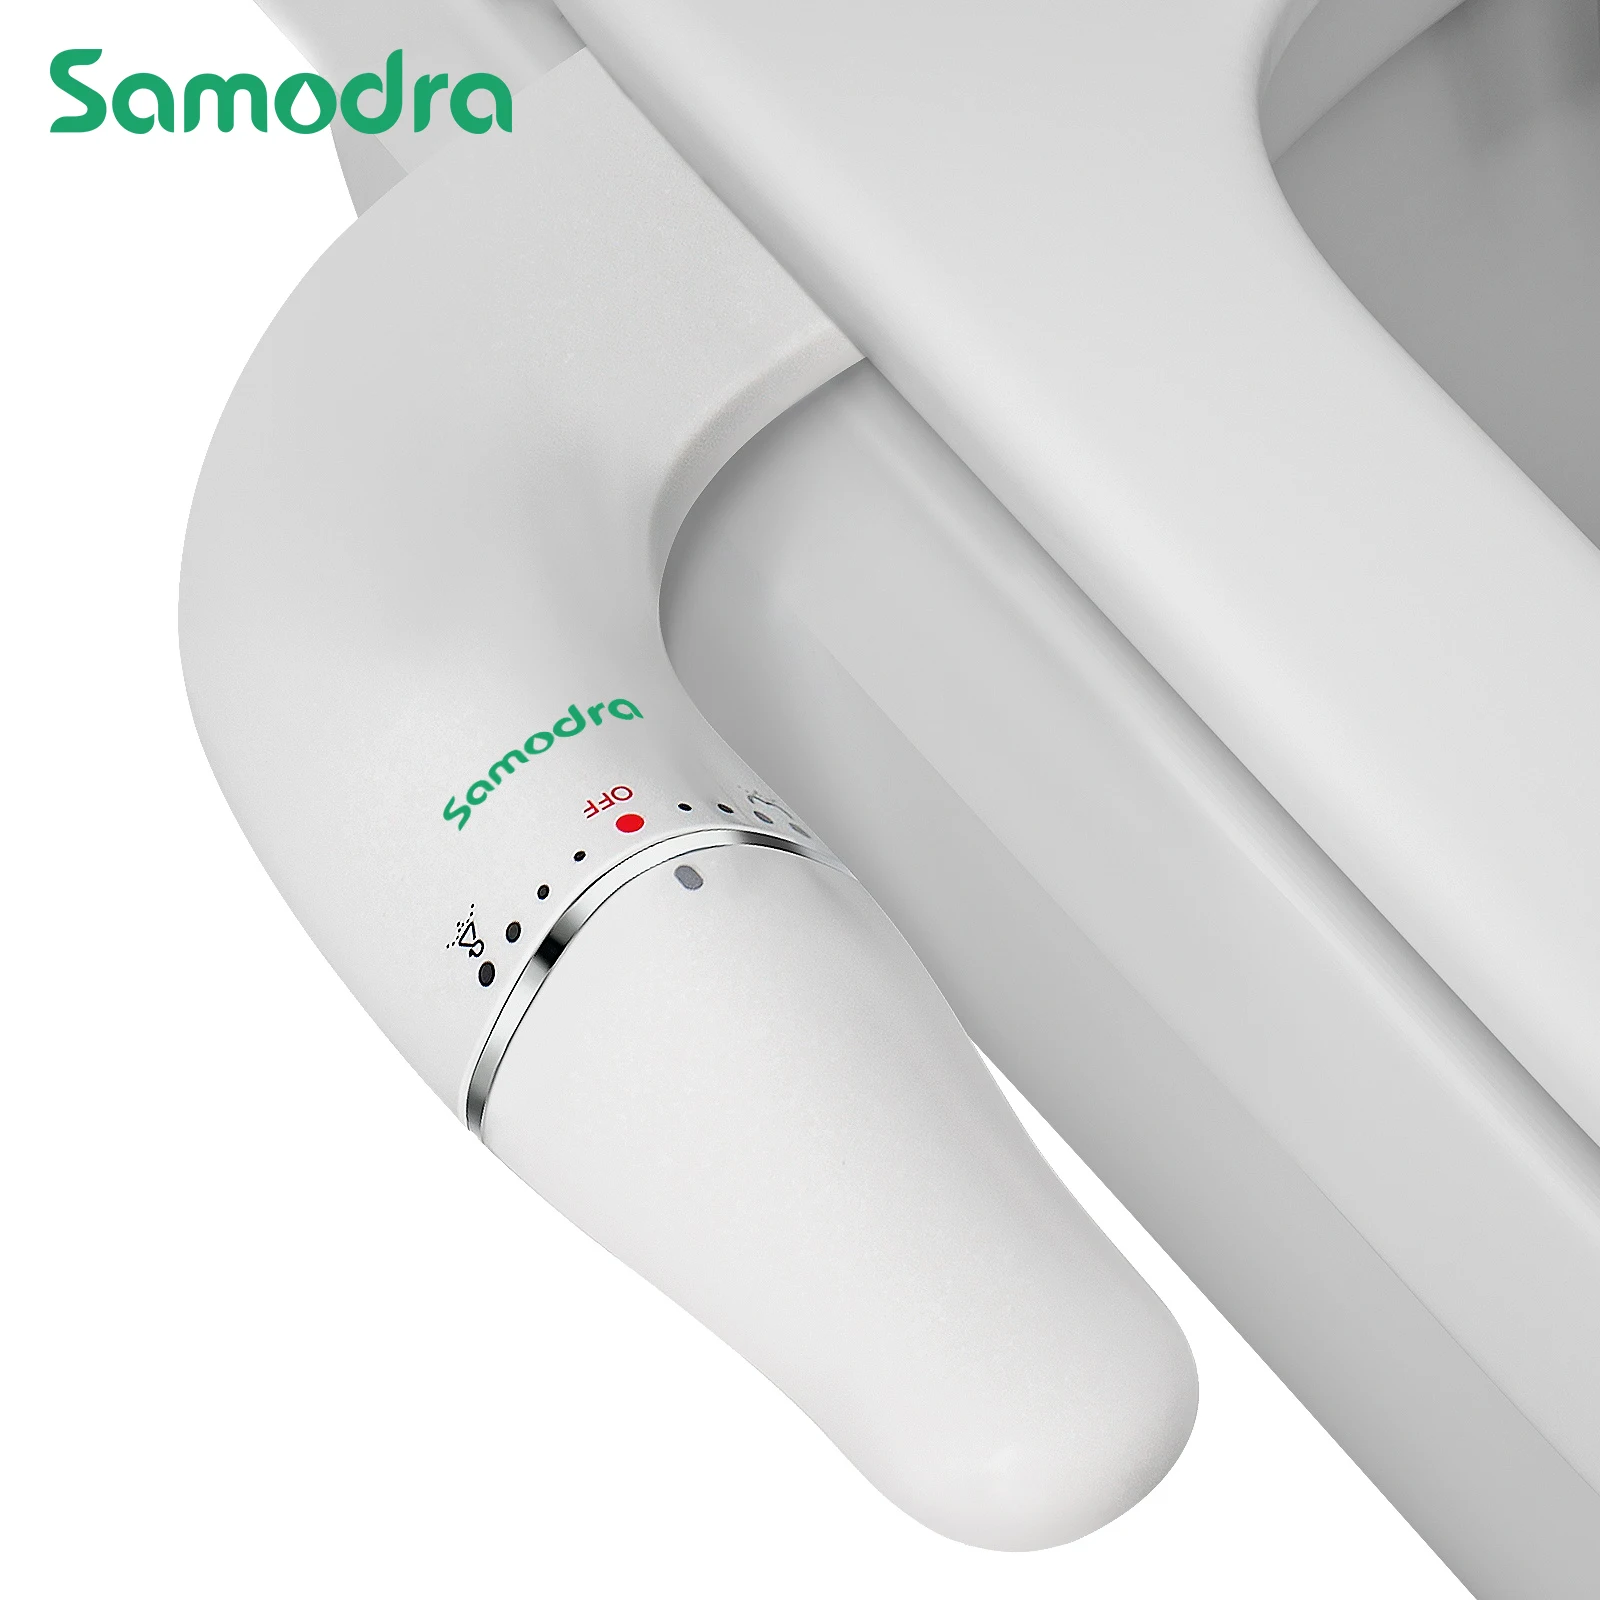 

SAMODRA Ultra Slim Bidet Attachment for Toilet Seat - Dual Nozzle, Adjustable Water Pressure, Non-Electric Ass Sprayer